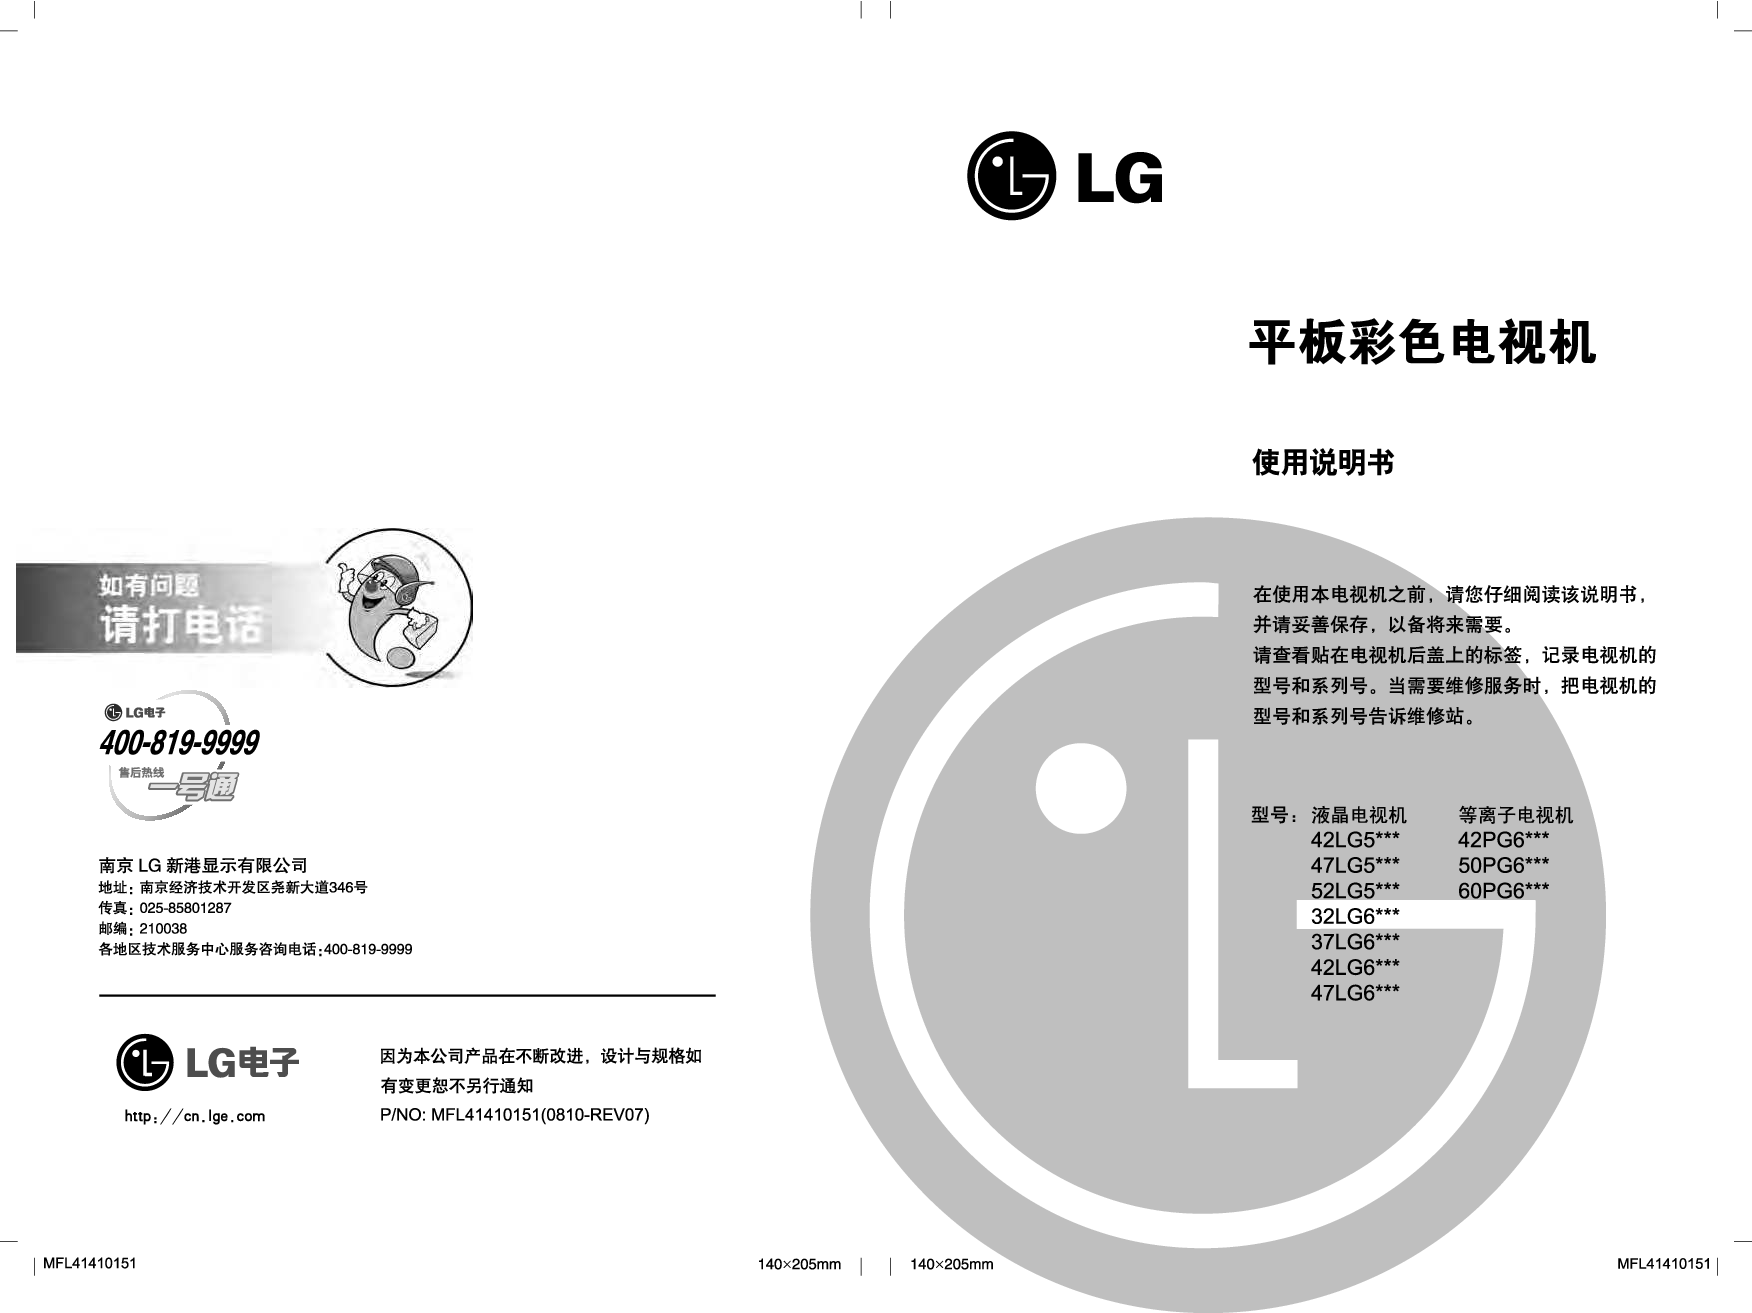 LG 32LG60UR, 42LG50FR, 50PG6900, 60PG60UR 使用说明书 封面